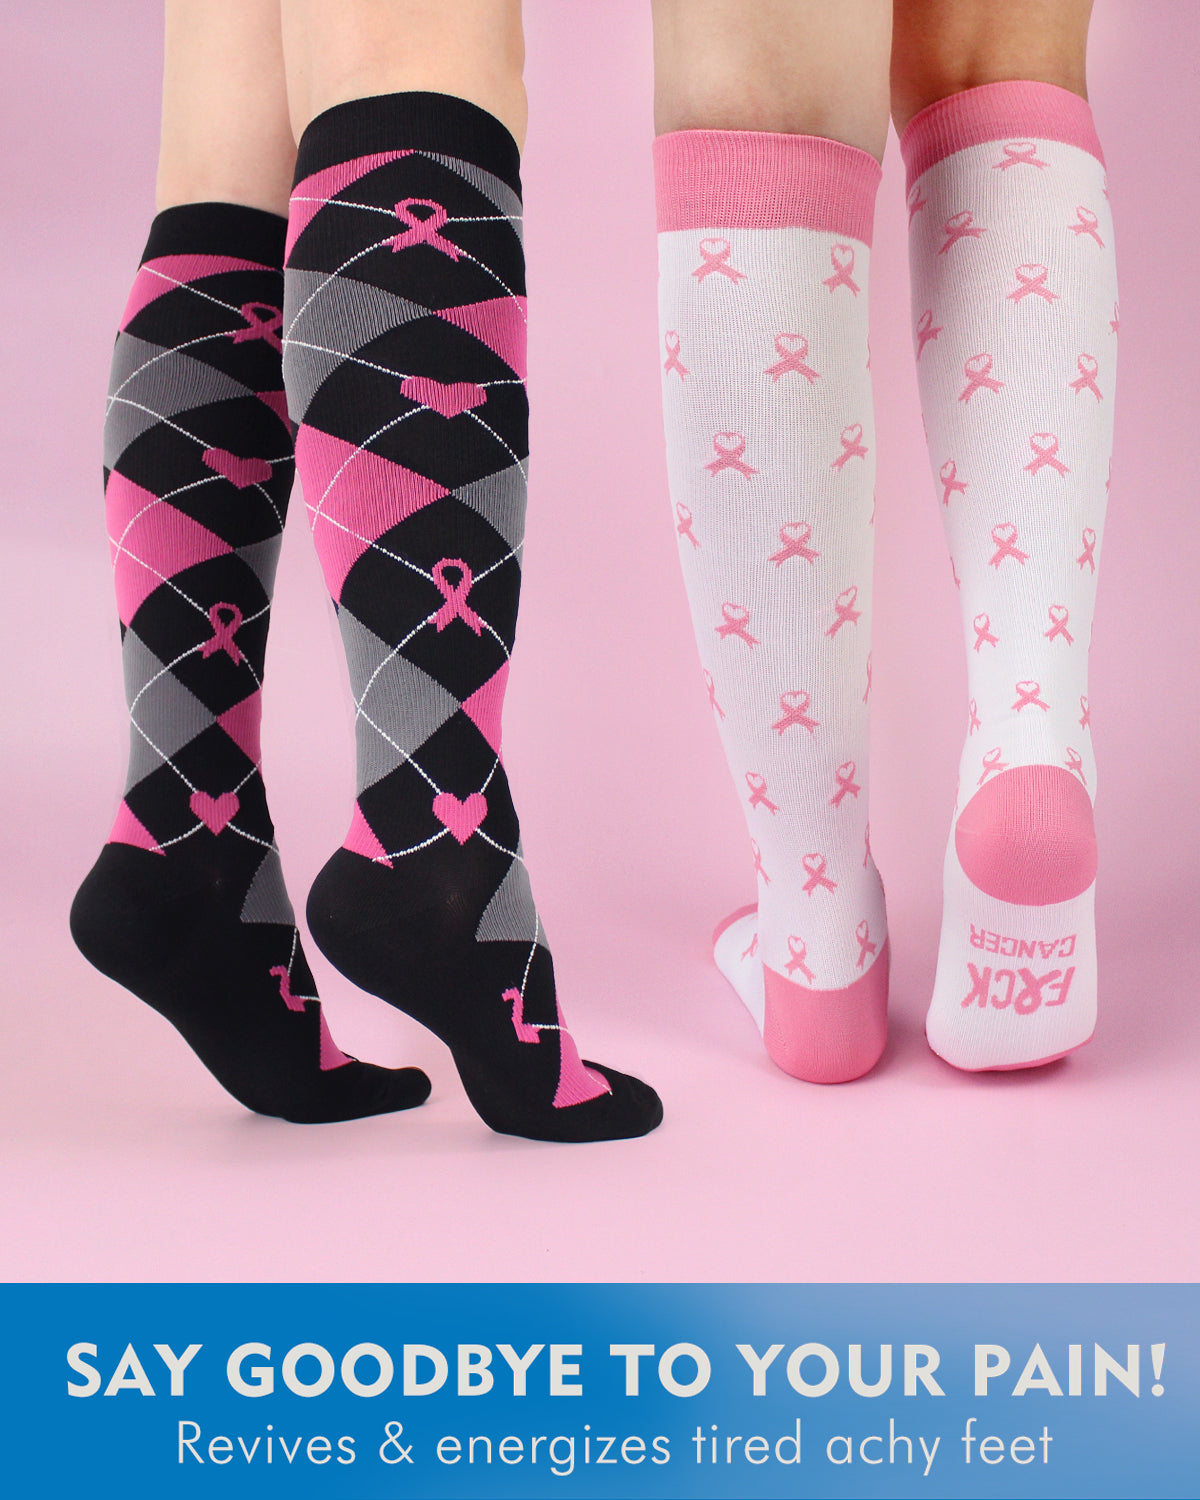 Hawkwell Pro Women's Compression Socks - Caliva Black/White Pink